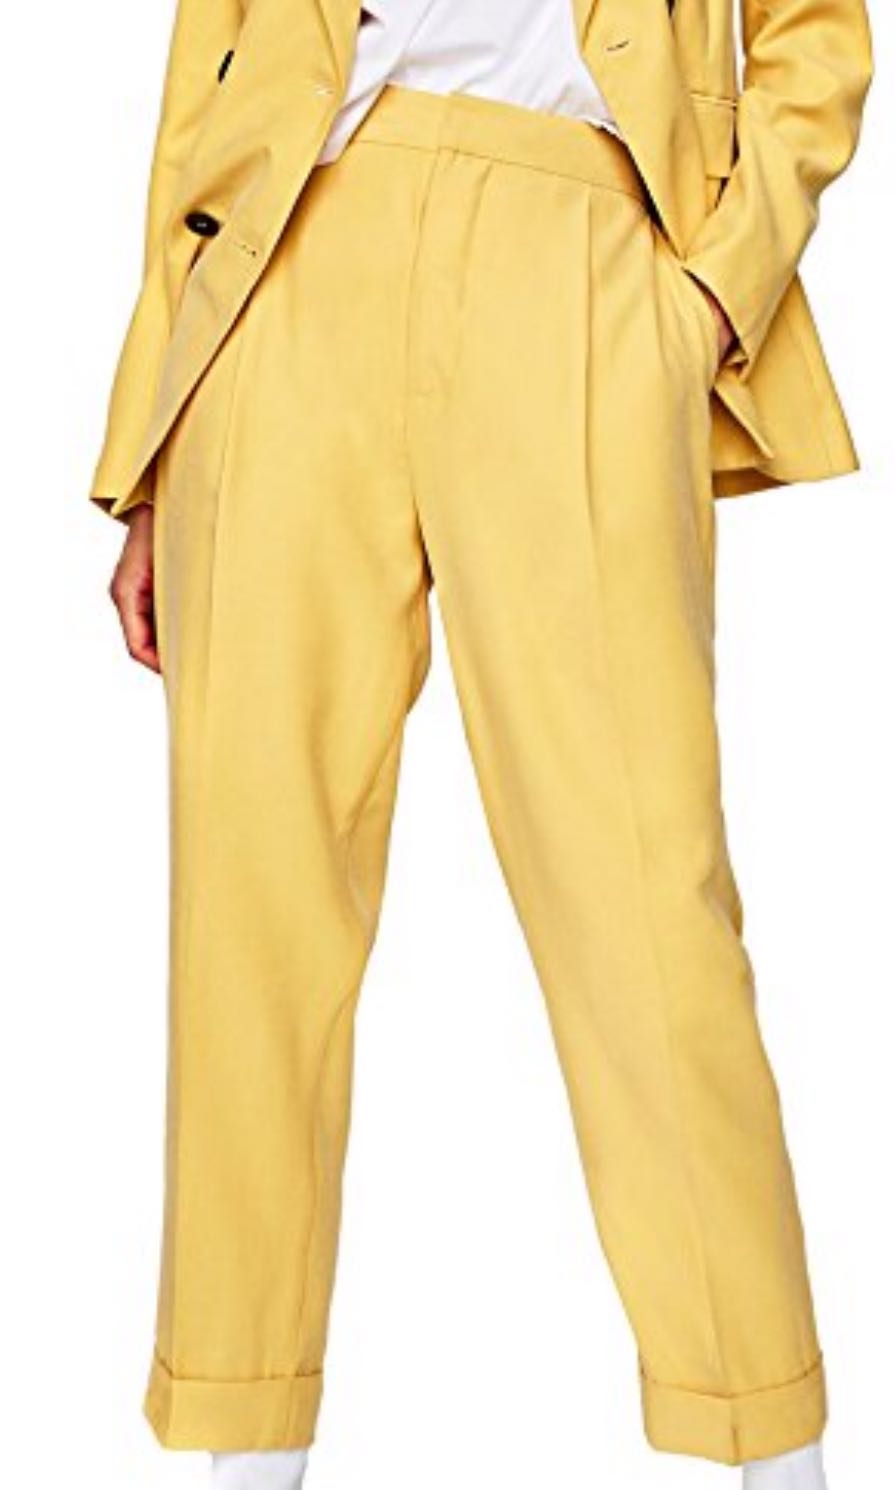 zara yellow trouser suit